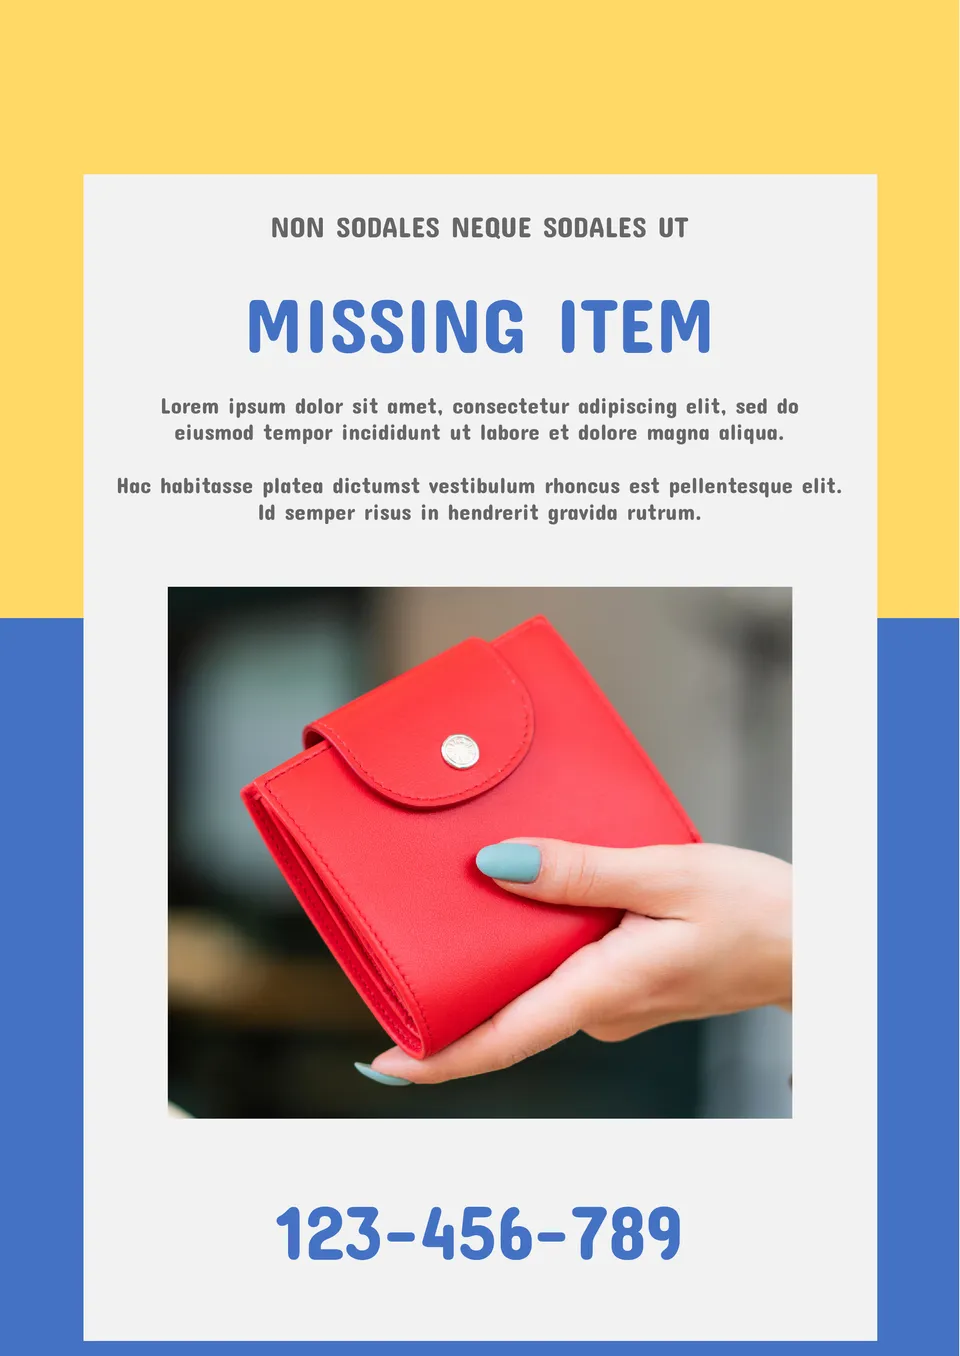 Missing item poster